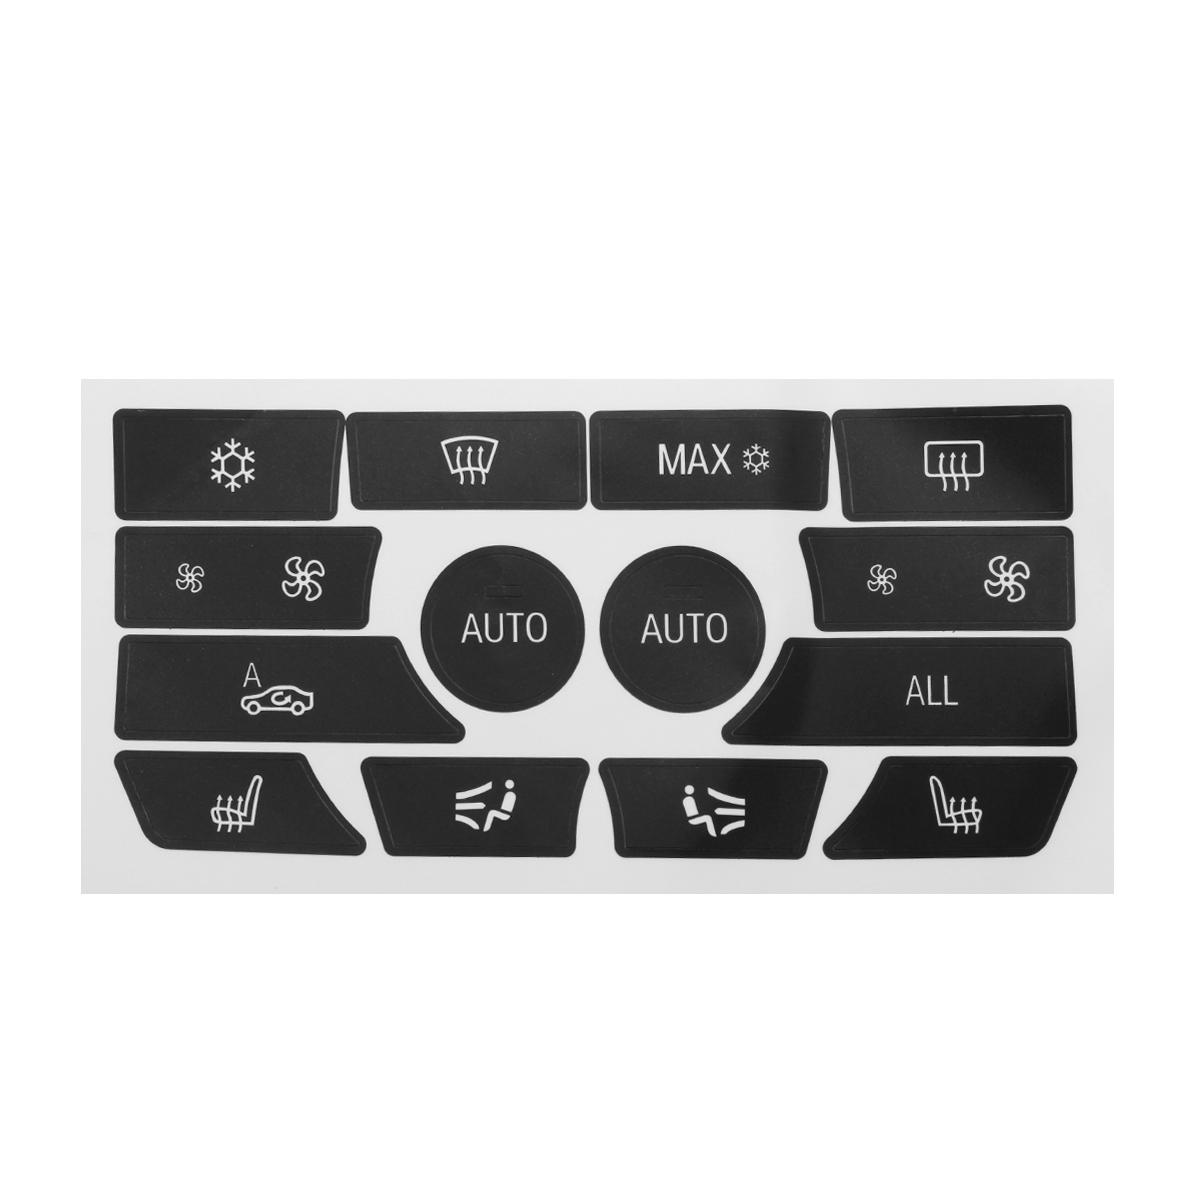 Dash Climate Control Auto Stereo Paneelknop Reparatie stickeret Voor BMW 5-serie 09-15